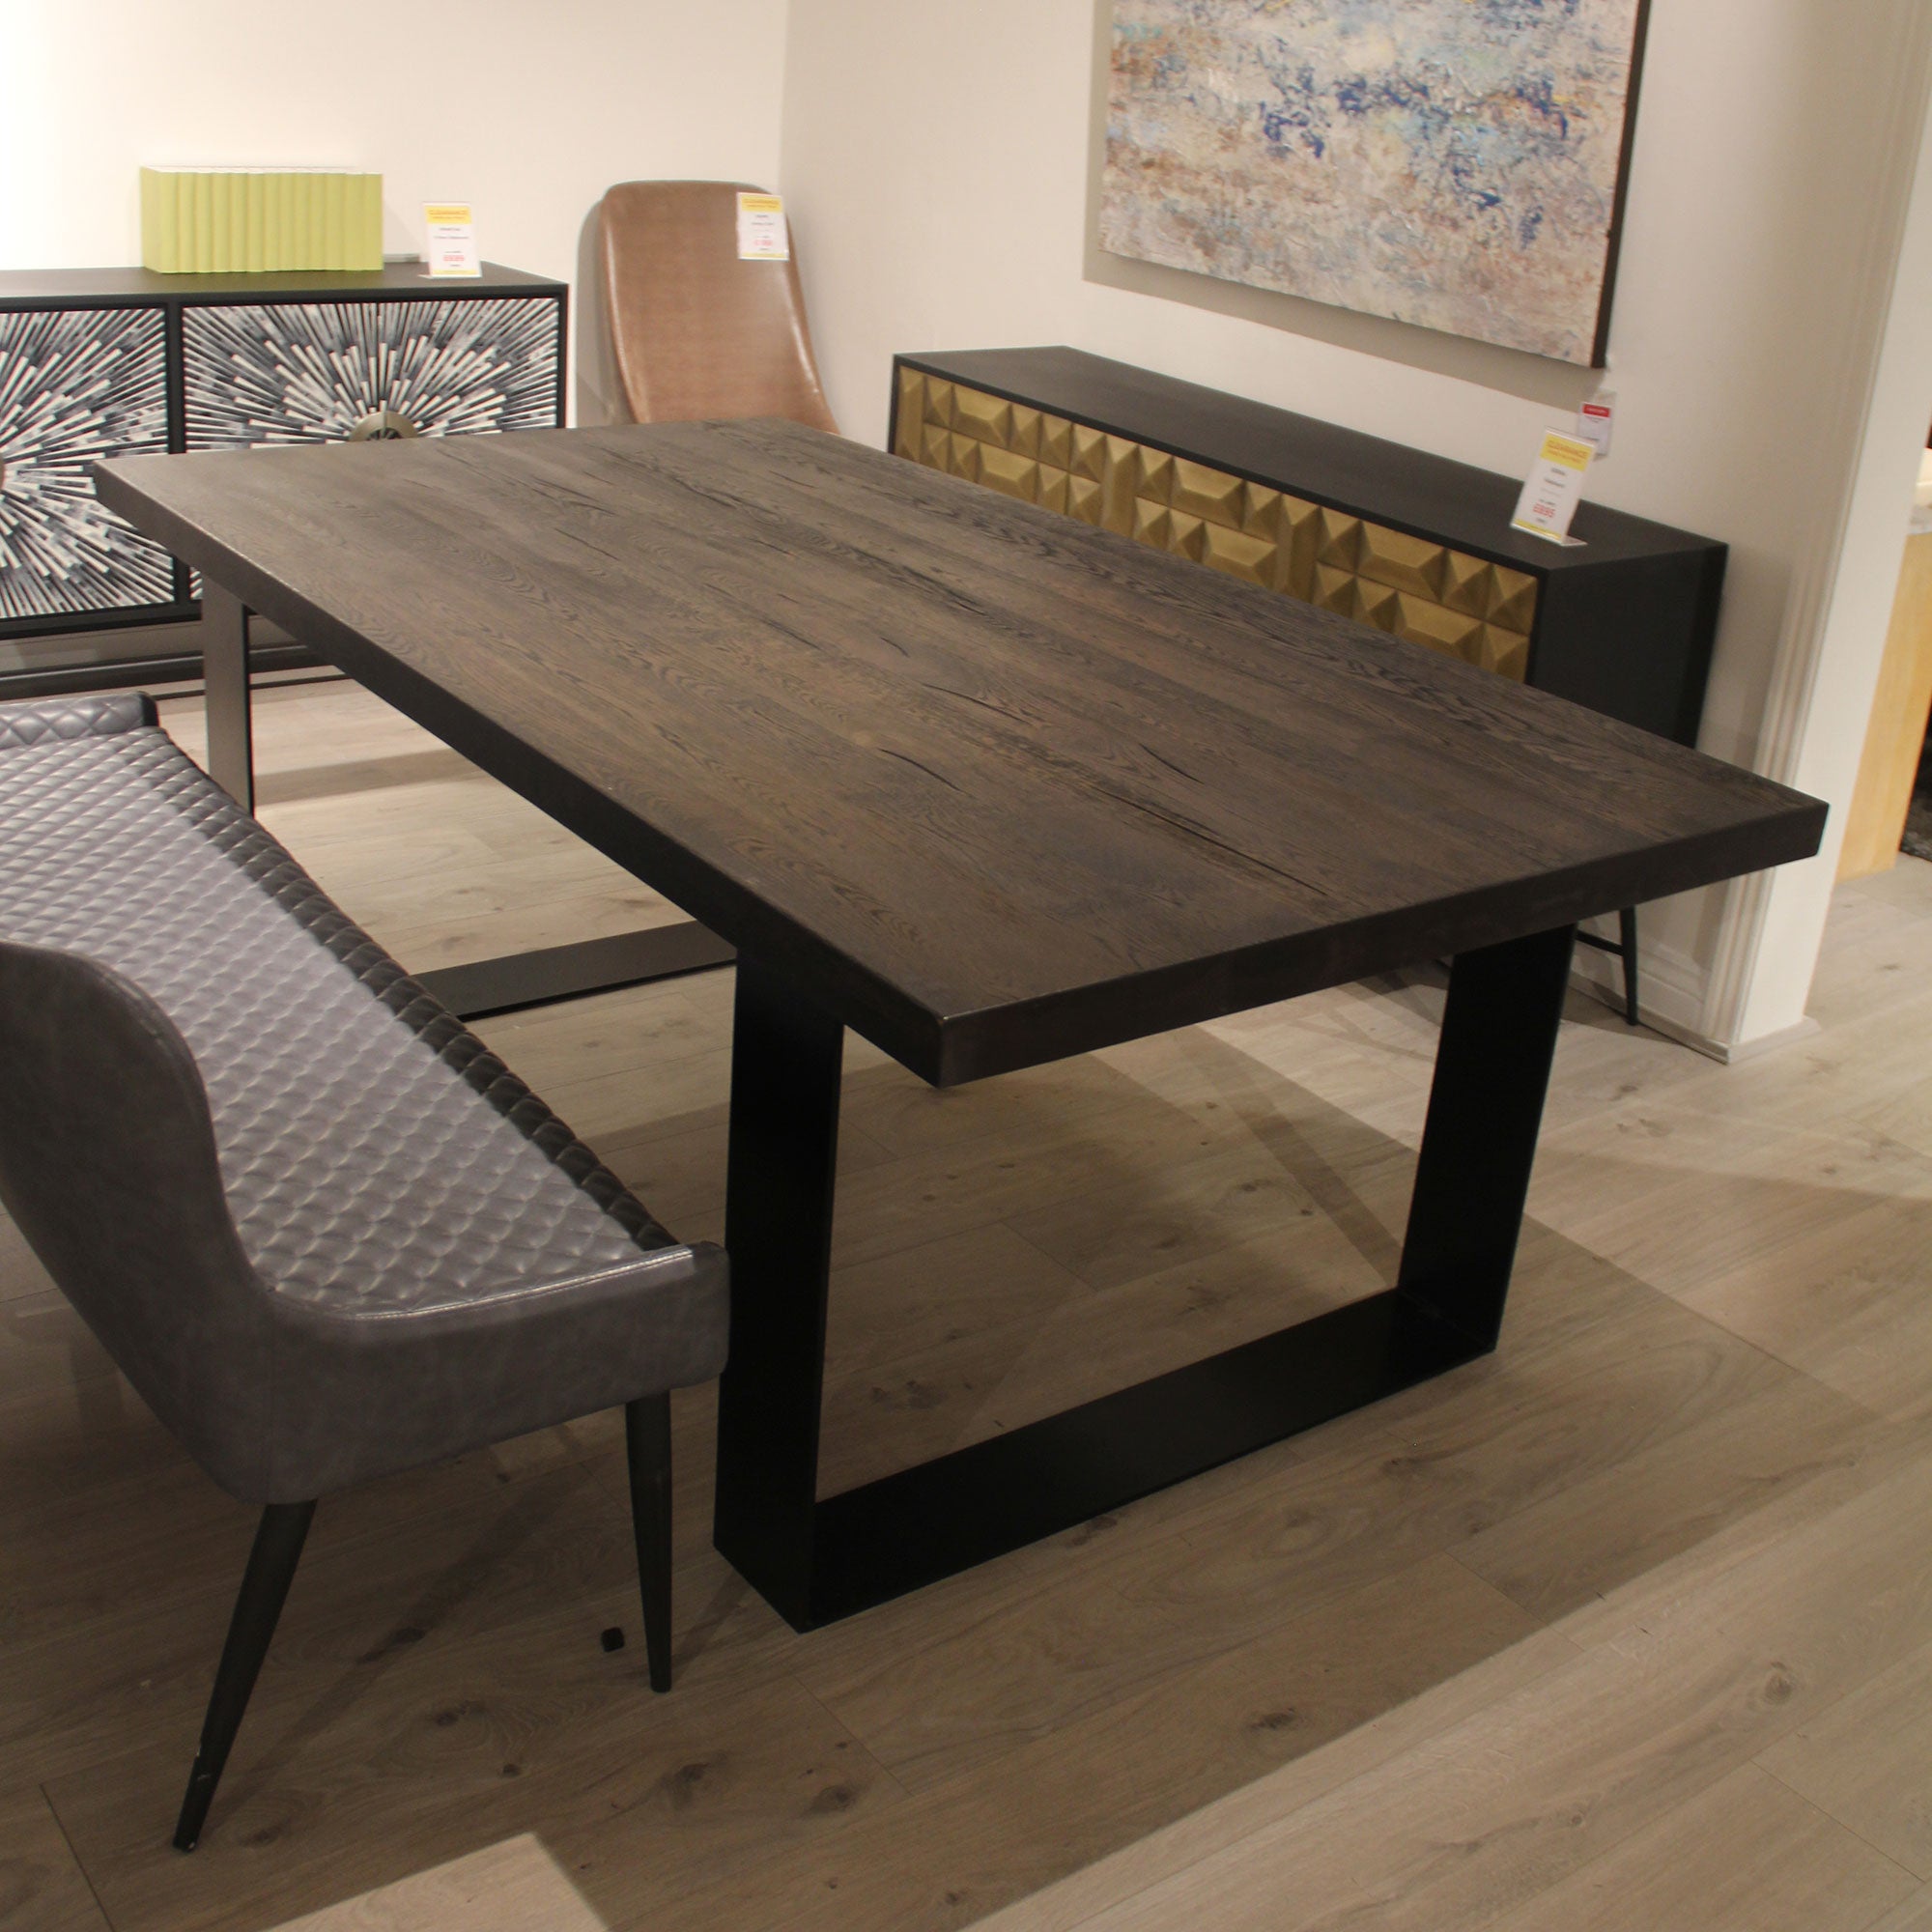 Colossus 200cm x 110cm straight edge dining table, dark wood top, black U-shaped legs / use